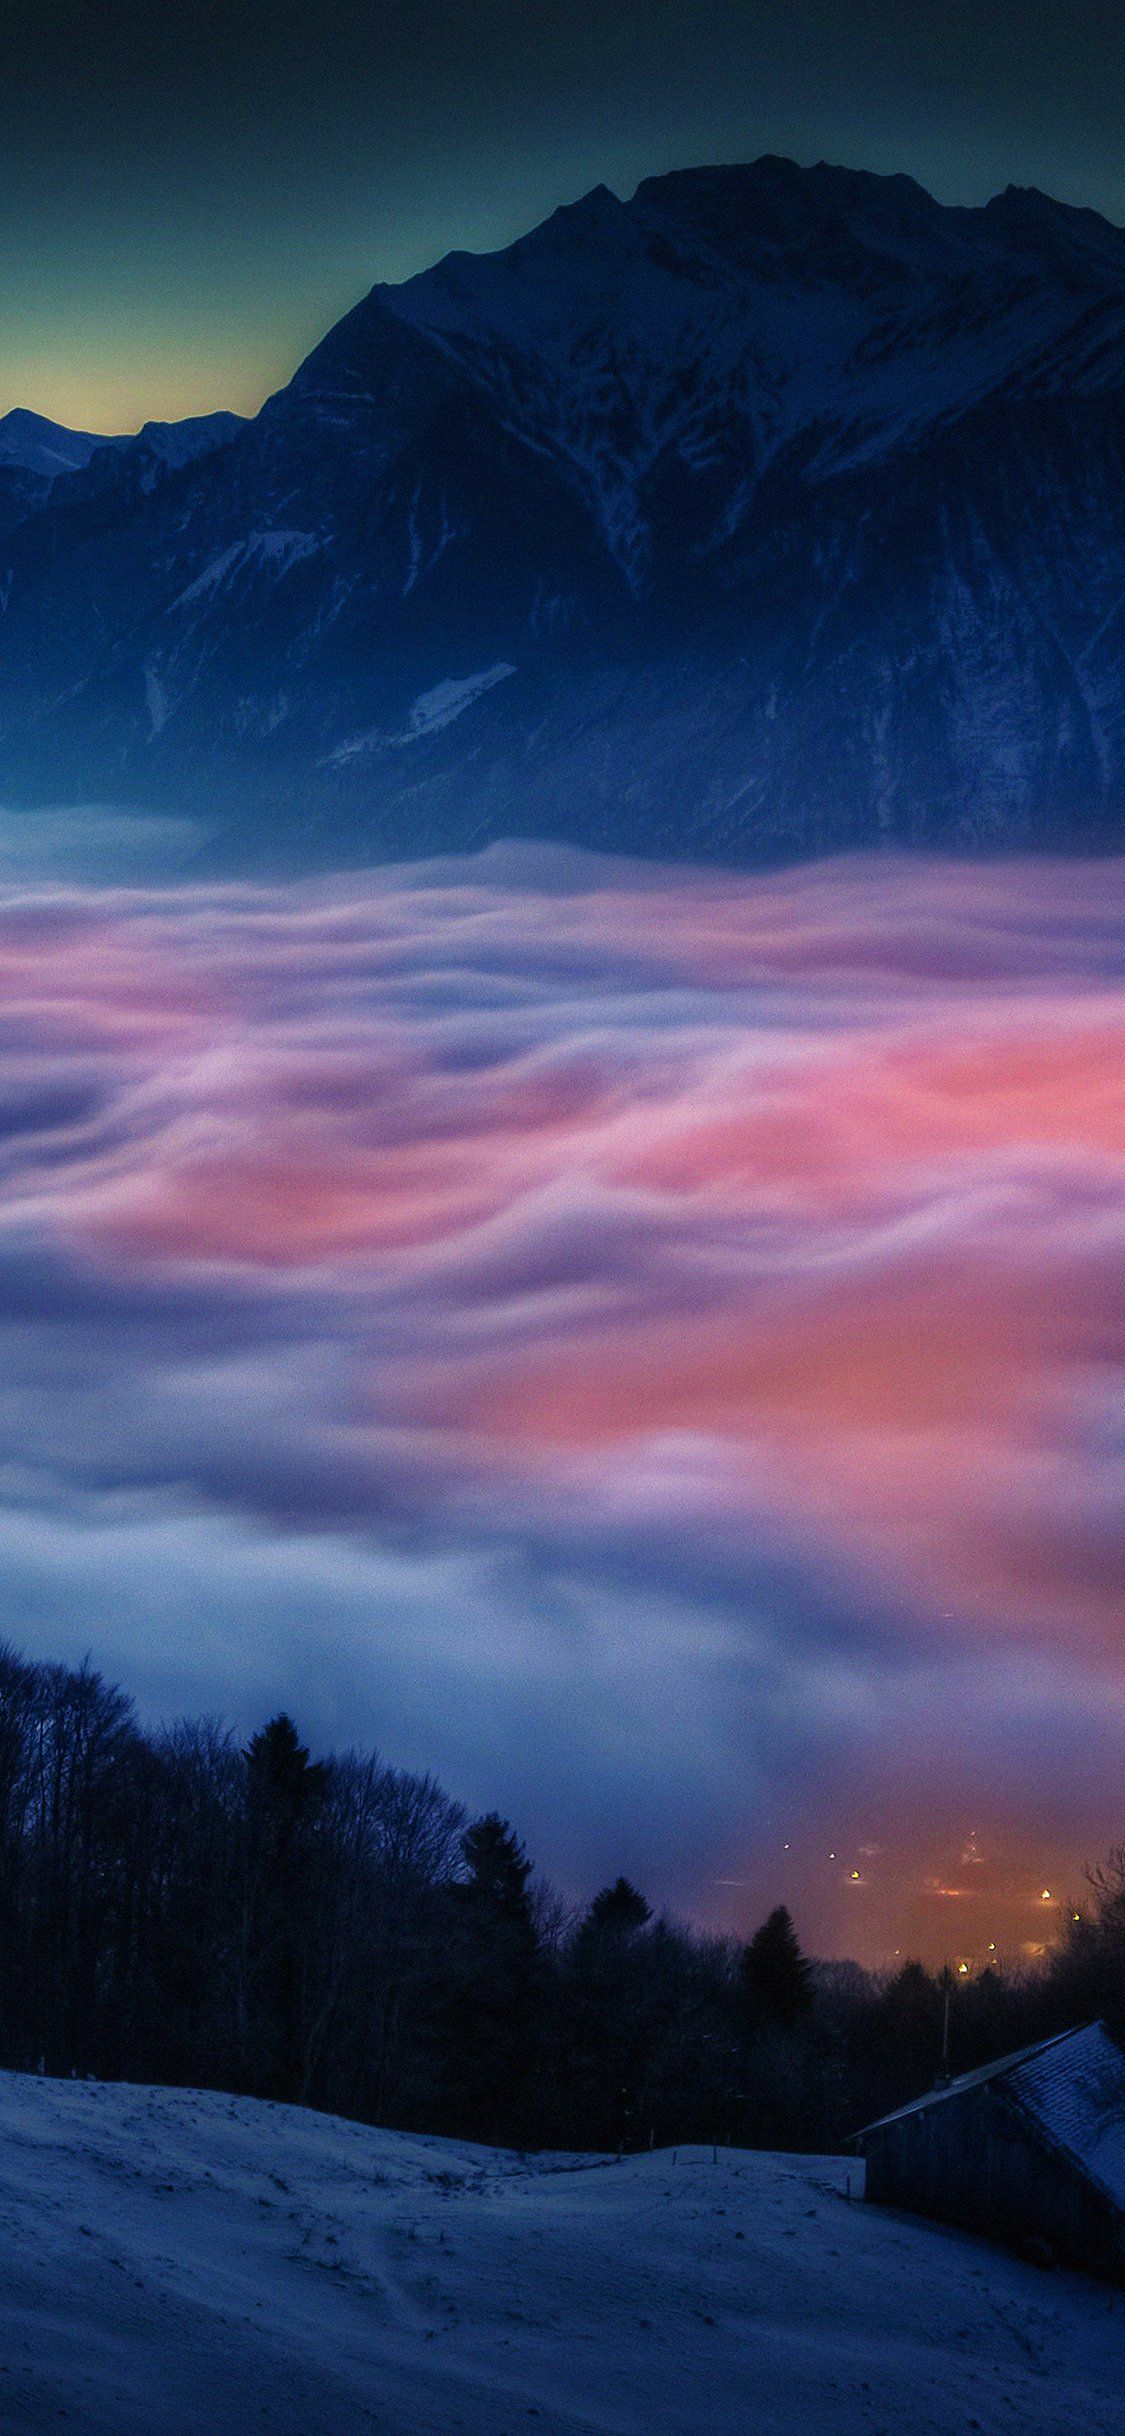 Smoky foggy mountain sunrise iPhone X Wallpaper Free Download